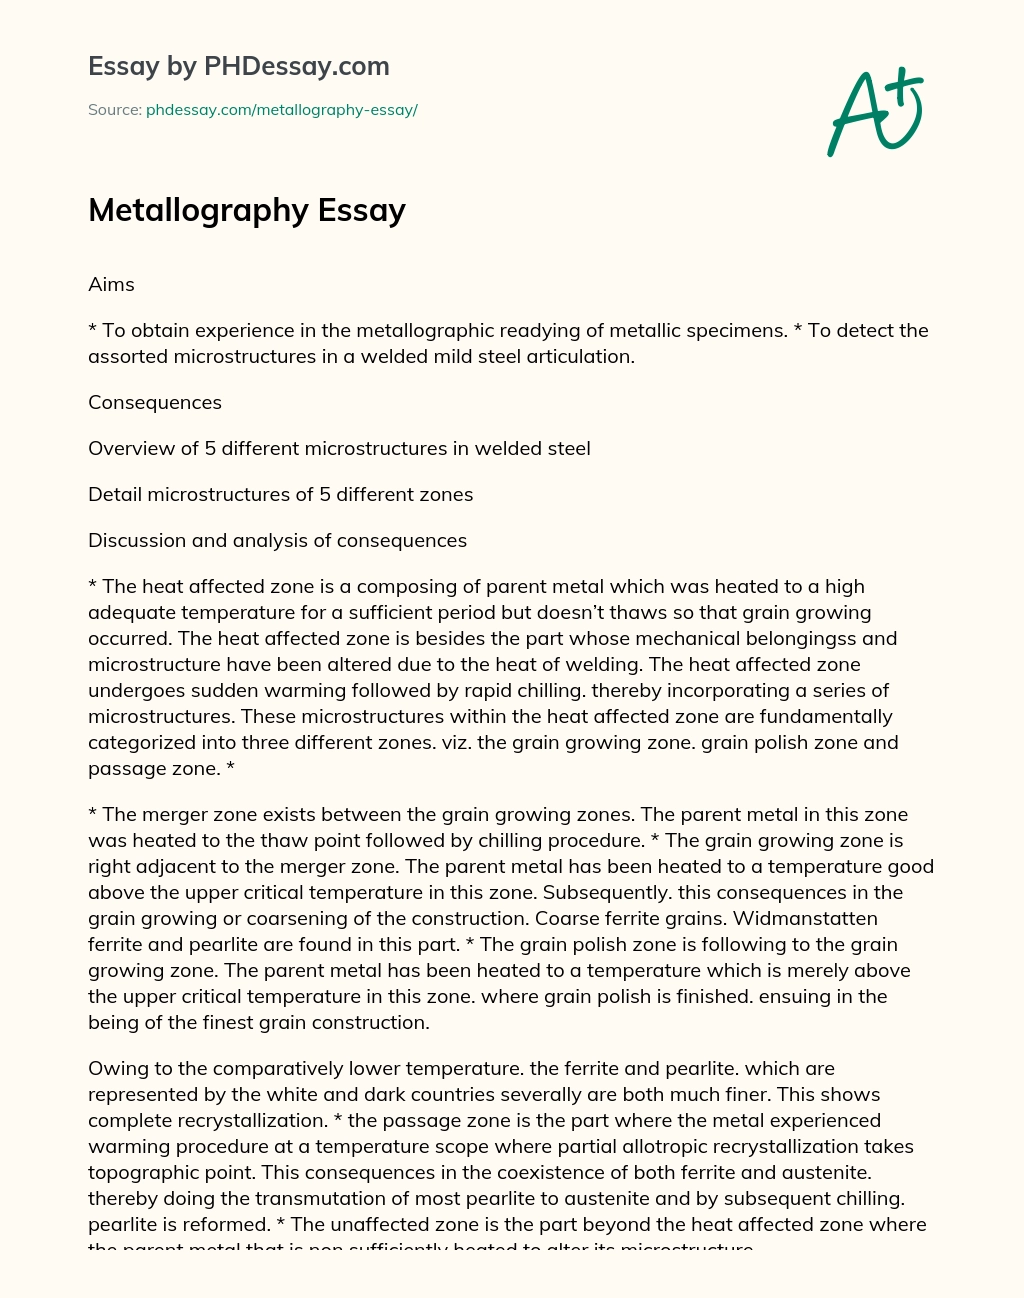 Metallography Essay essay